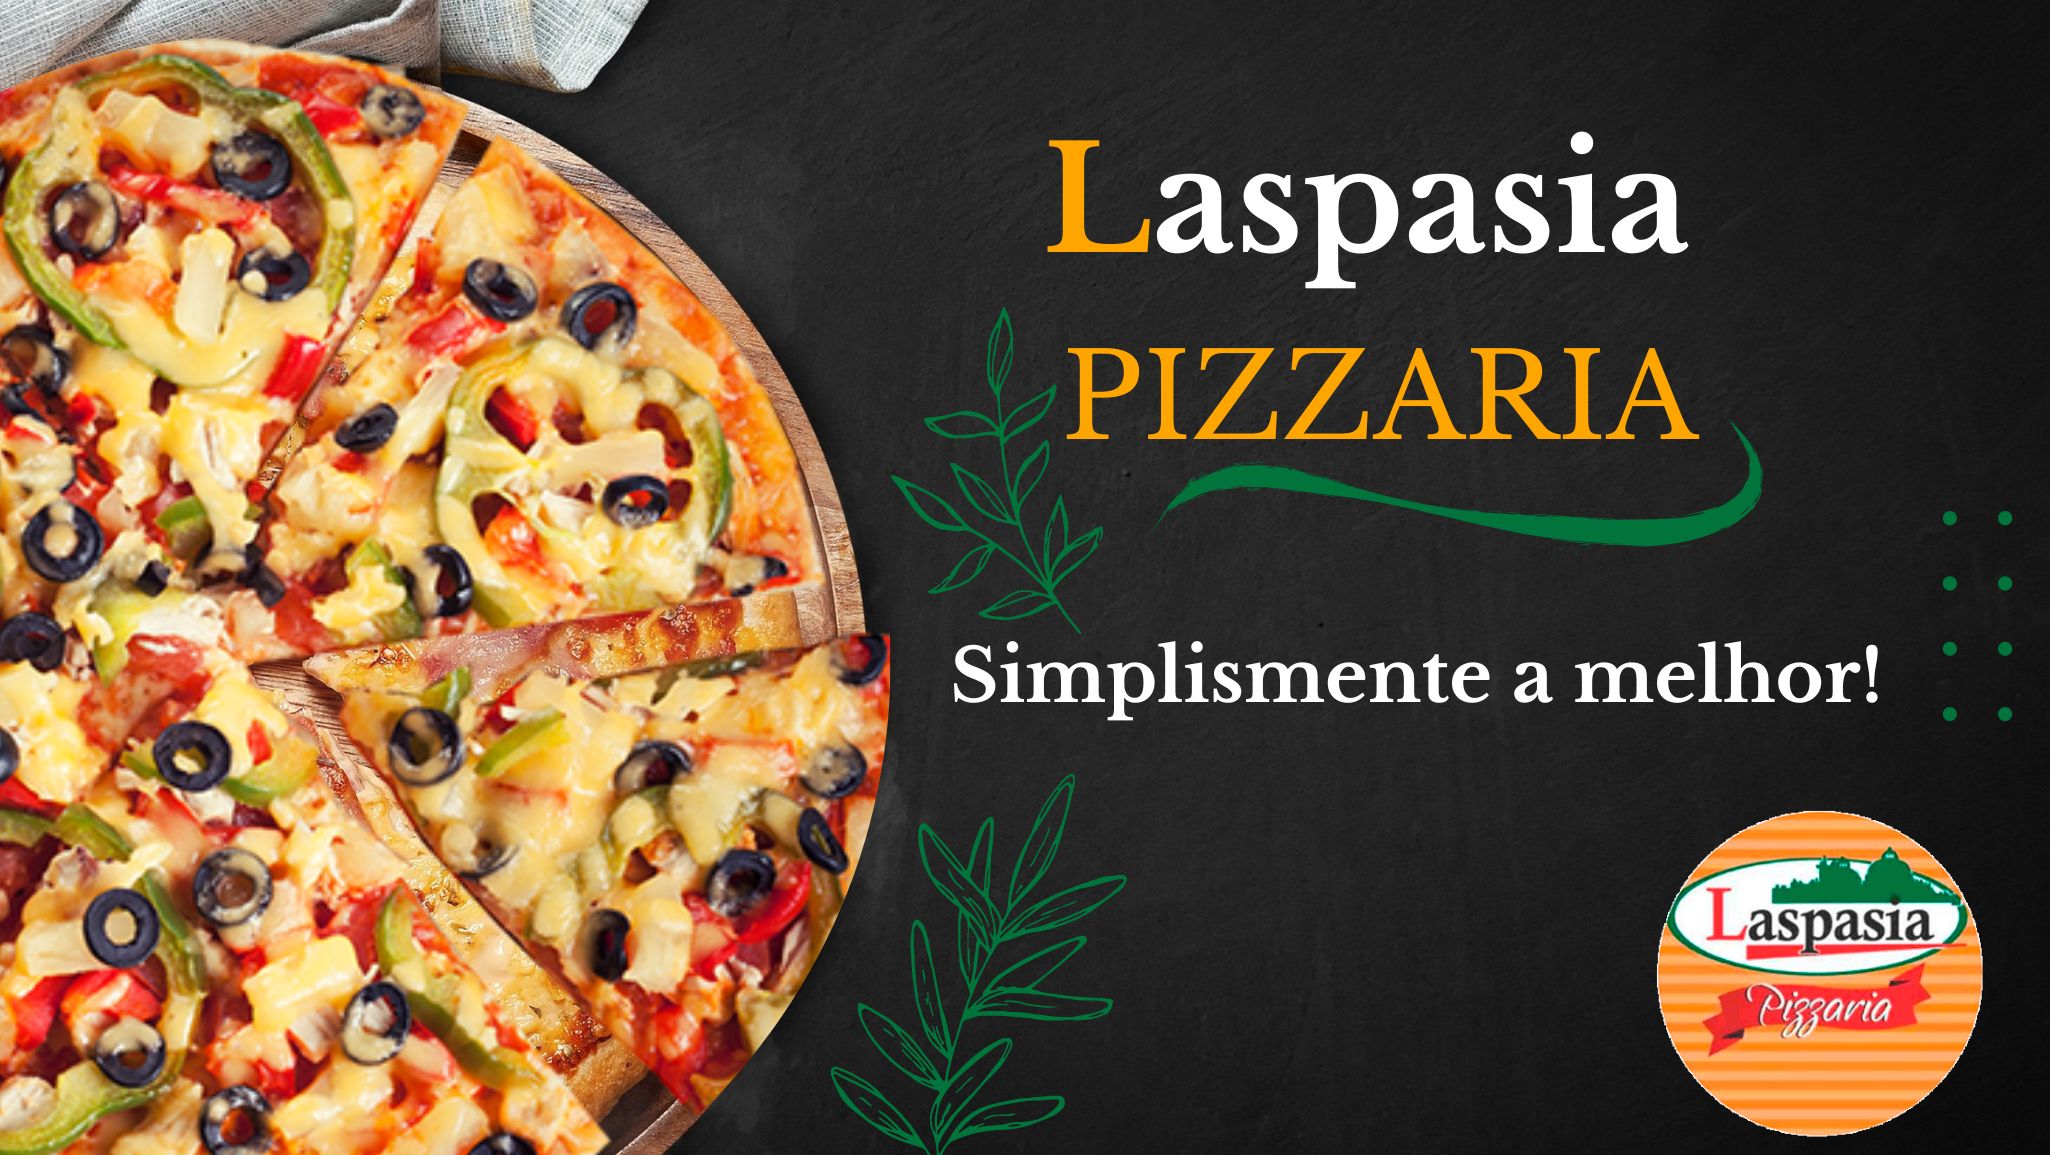 Pizzaria em Avaré Laspasia Pizzaria ANV avarenetvirtual